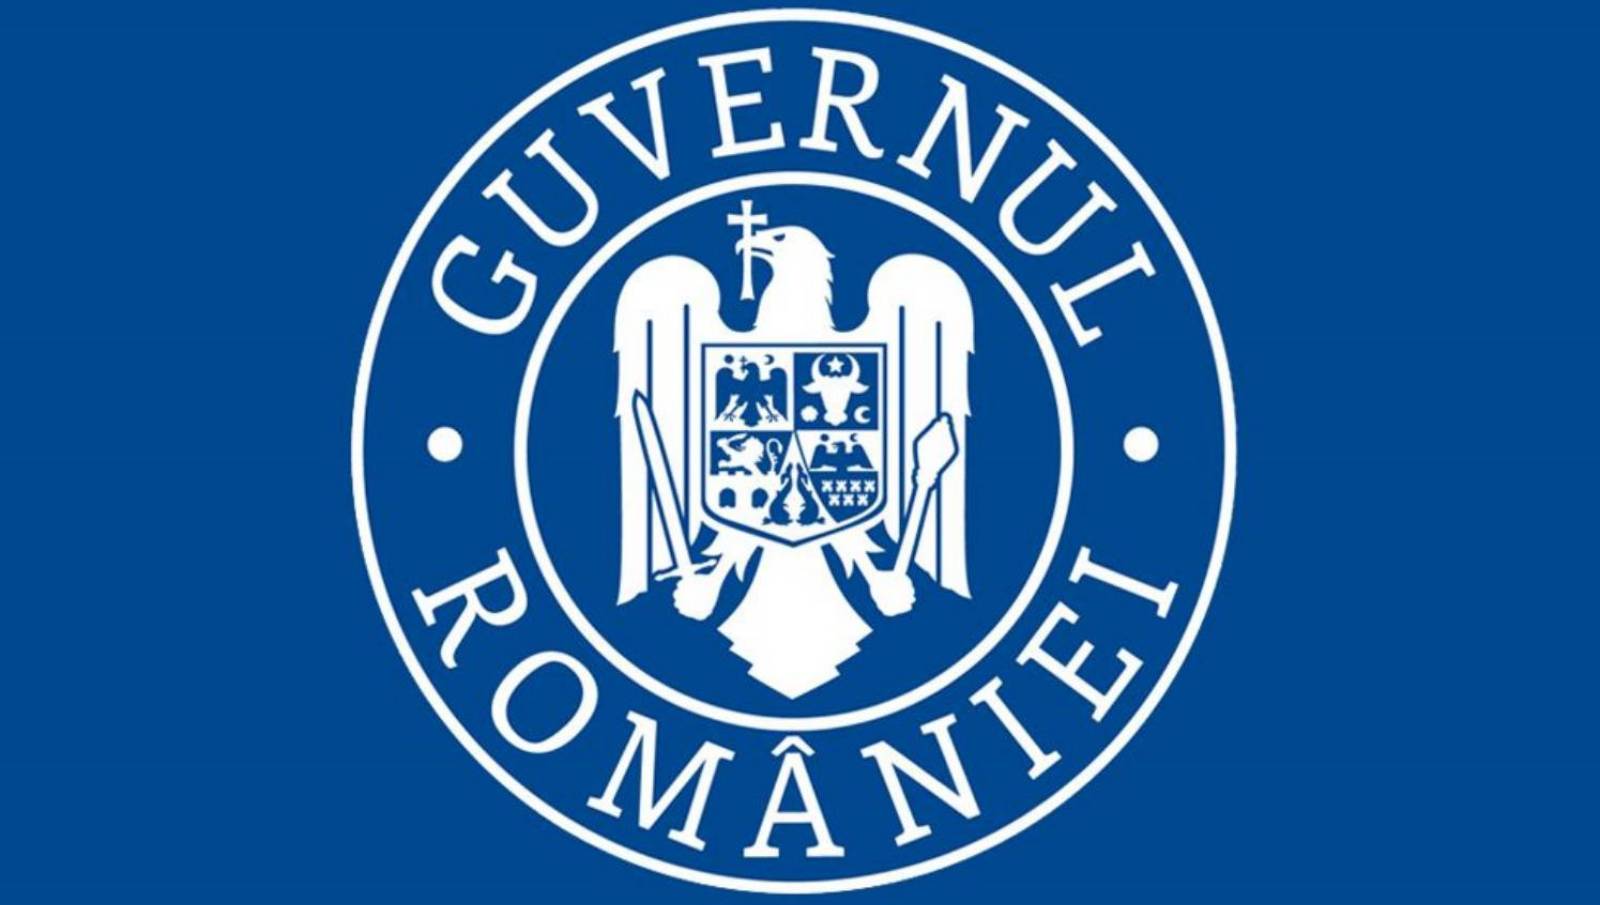 Government of Romania chief phishing message